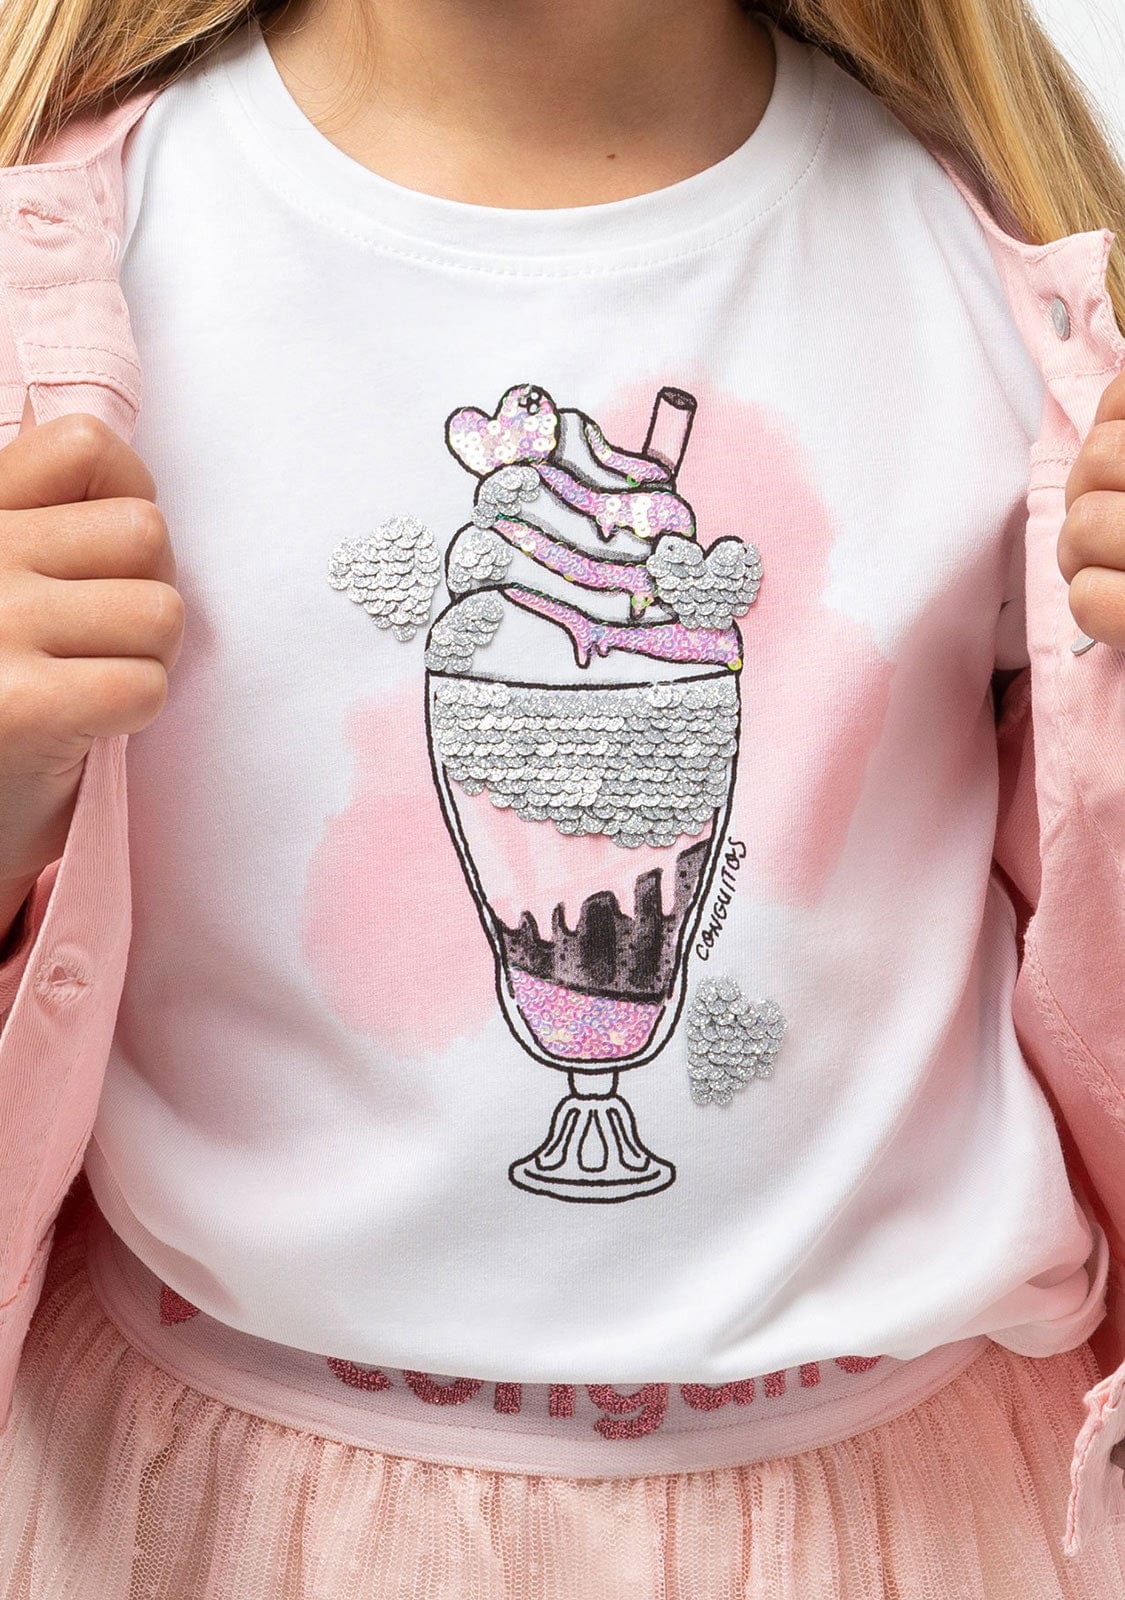 CONGUITOS TEXTIL Clothing Girl's "Ice Cream" T-shirt